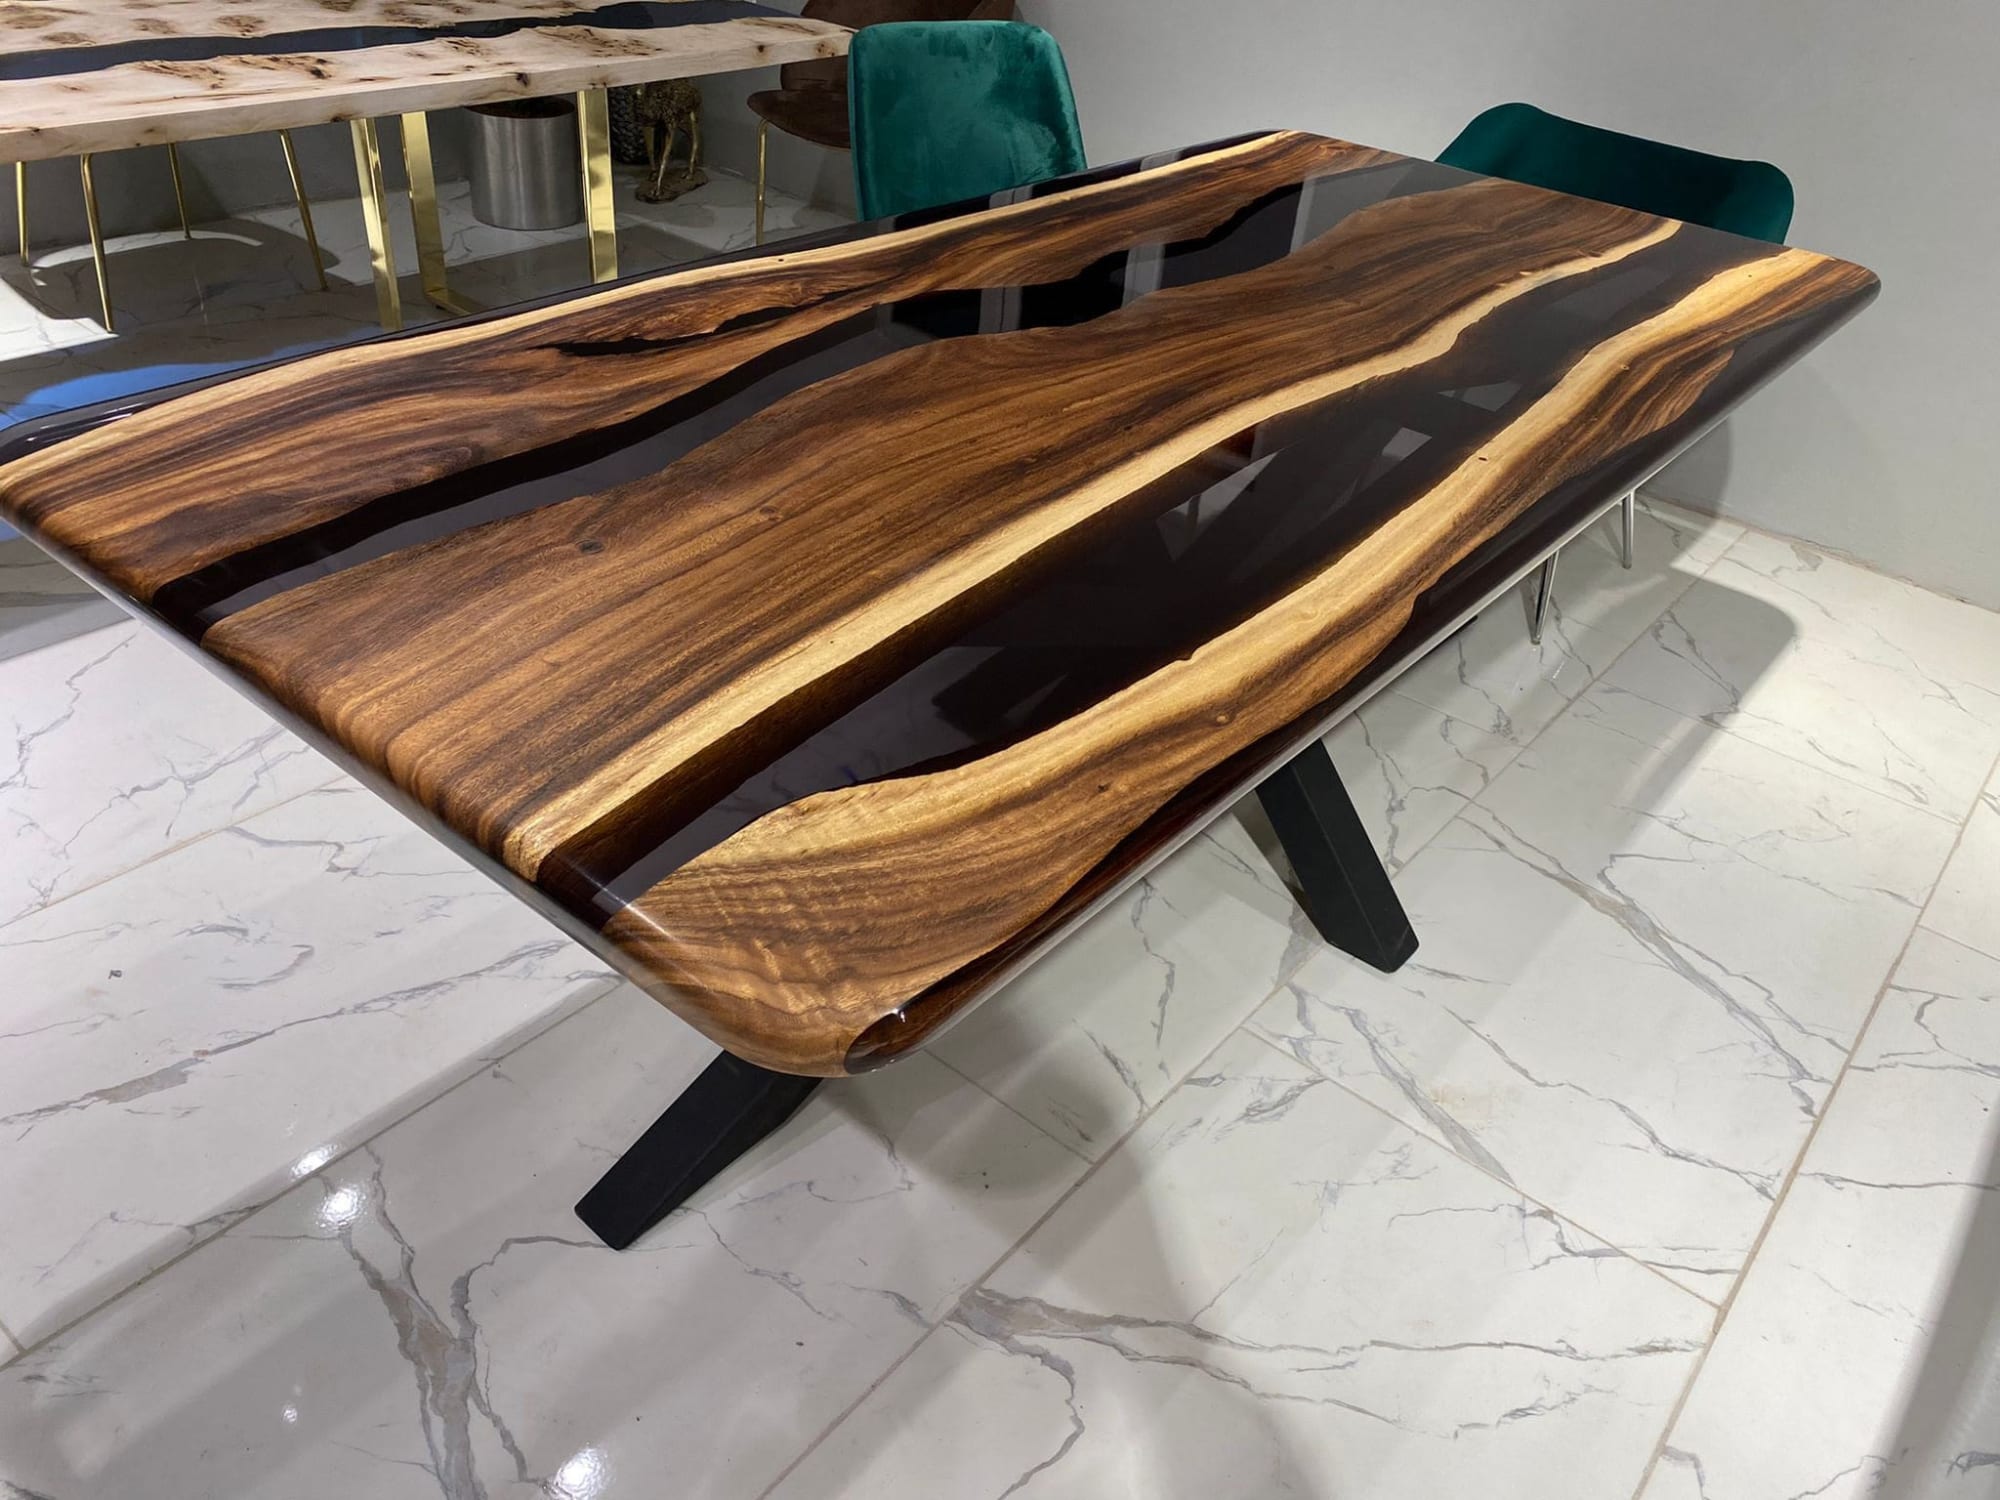 96 x 48 Epoxy Resin Wooden Table Top Unique River Table Design Home Decor